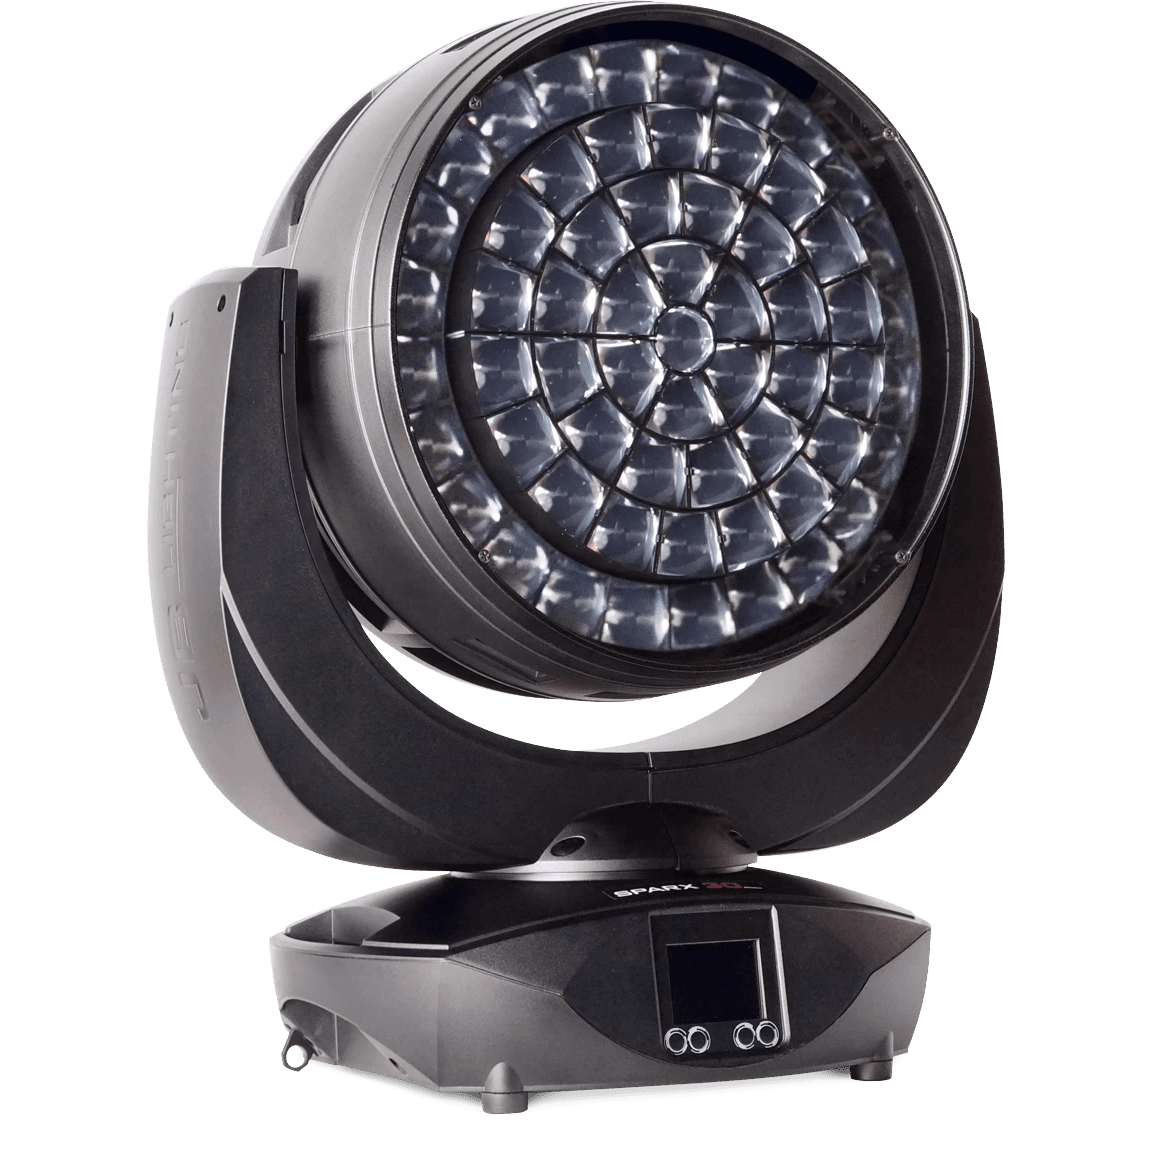 JB-Lighting Sparx 30 LED Wash Moving Head